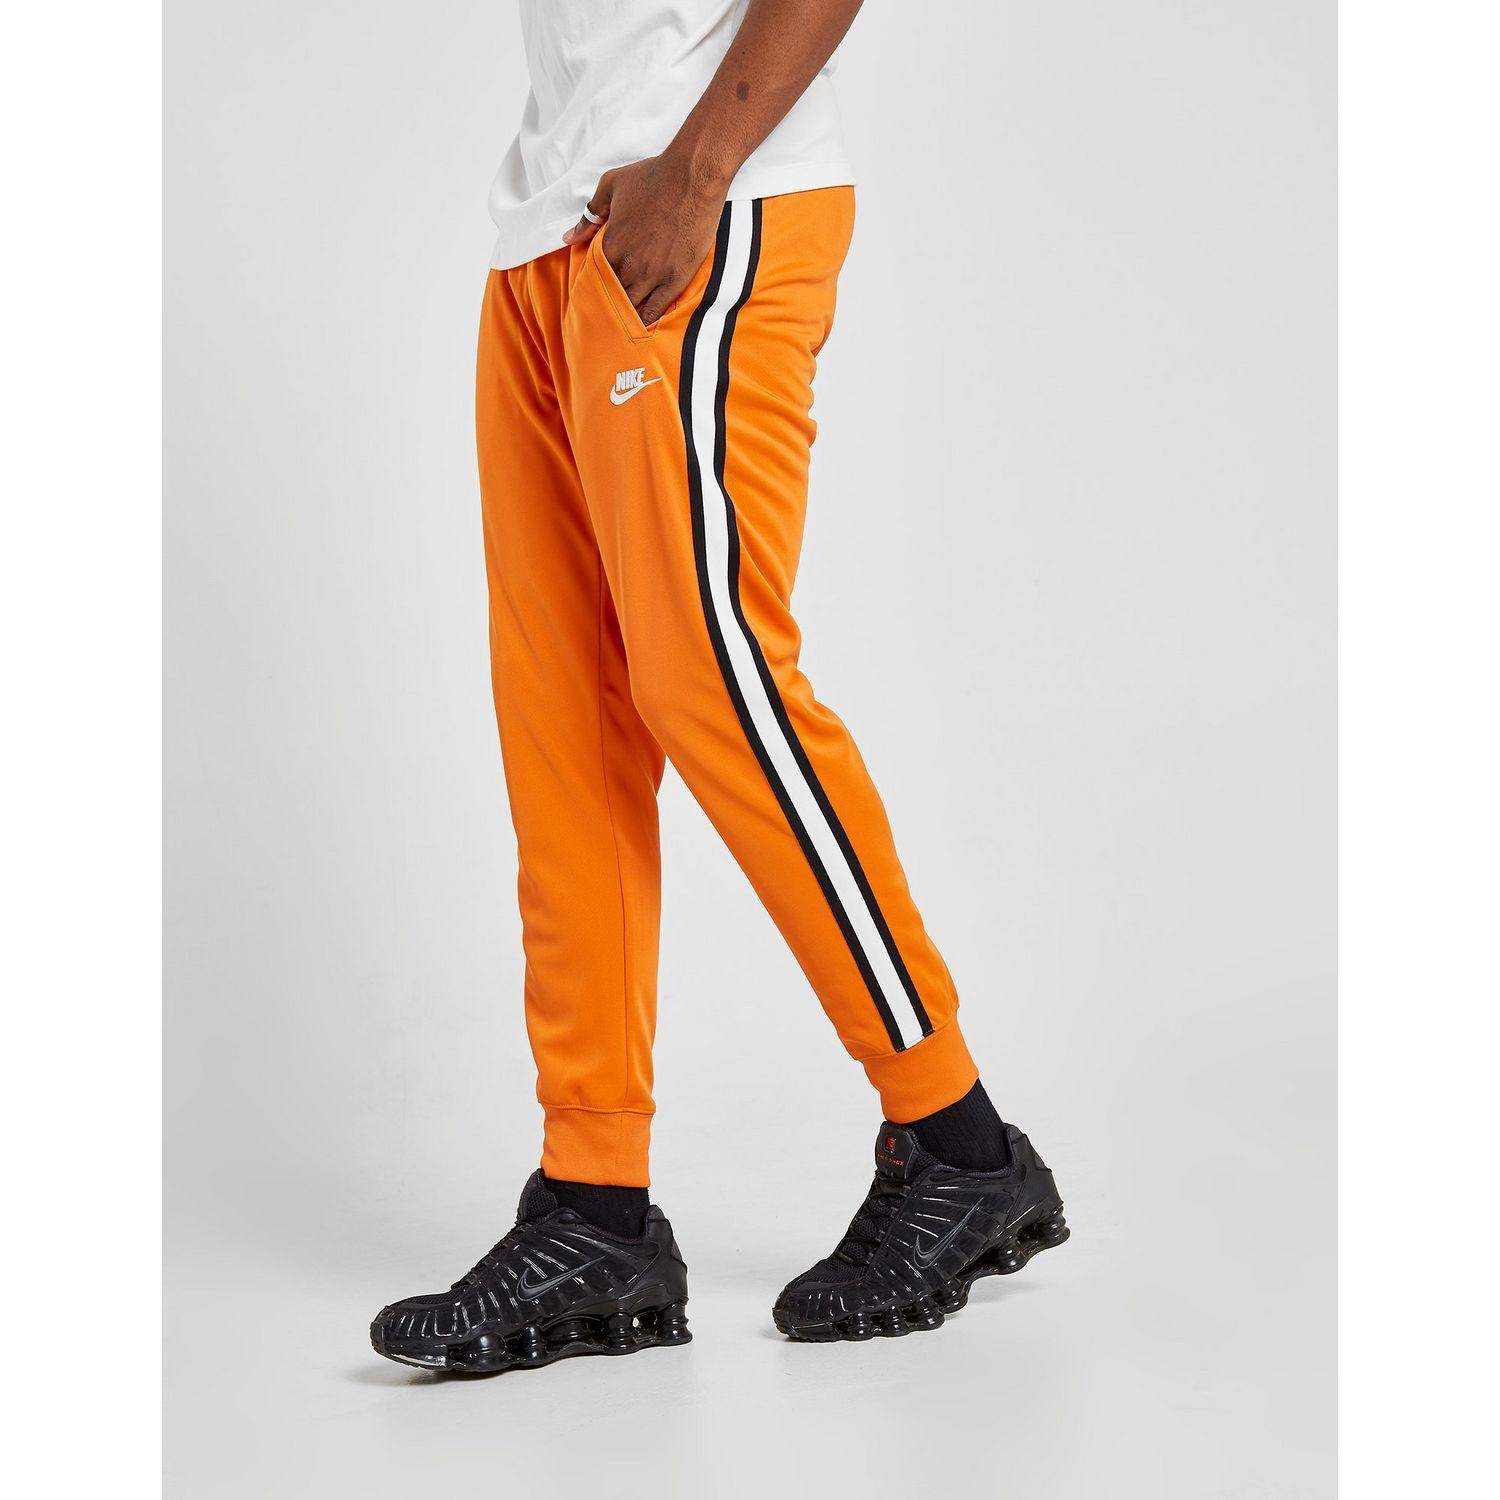 nike orange track pants 